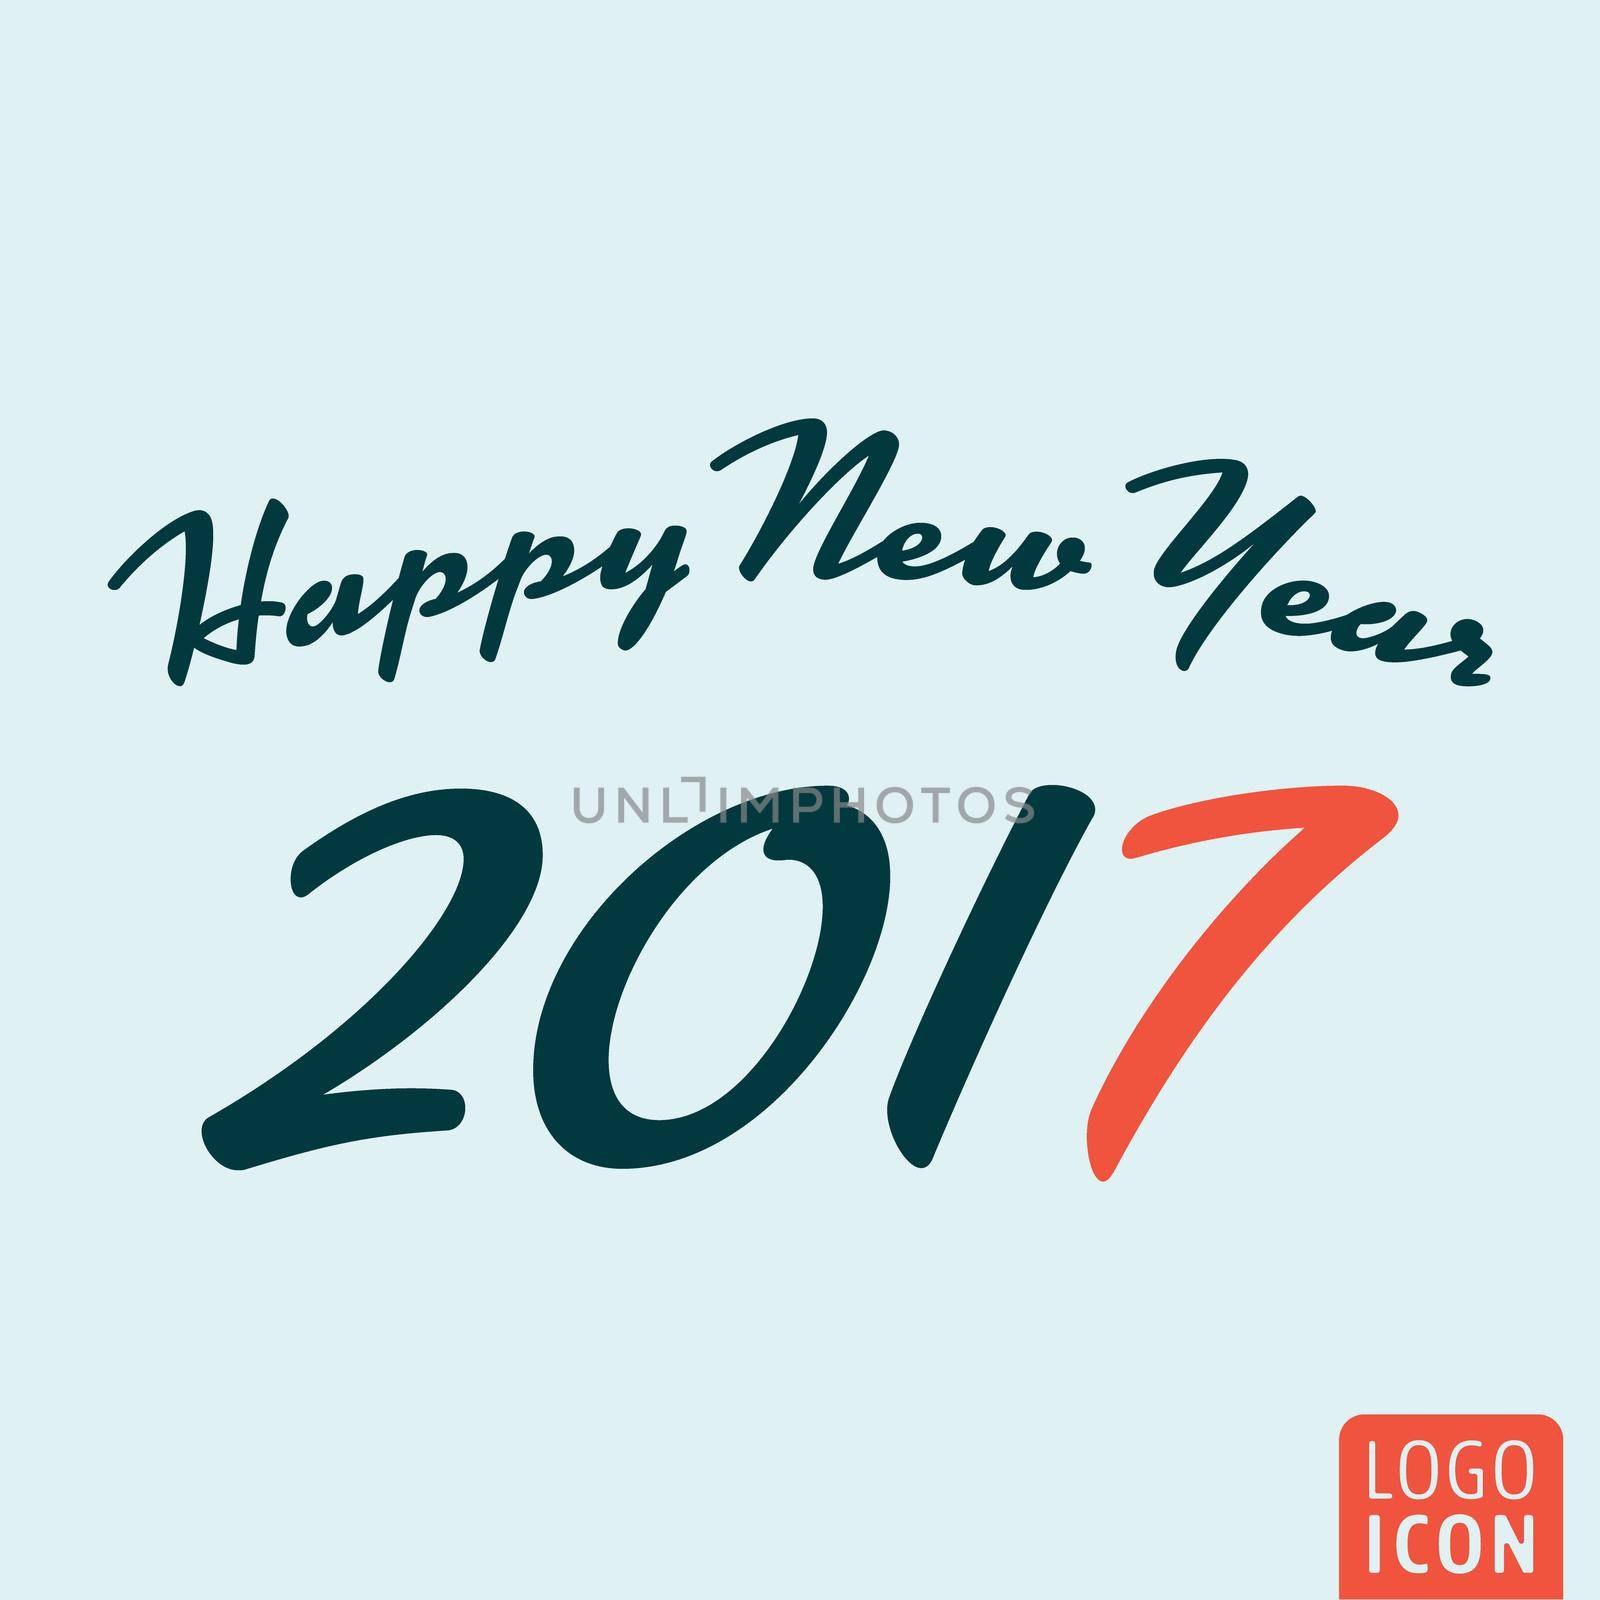 New year 2017 icon. Happy new year inscription. Vector illustration.